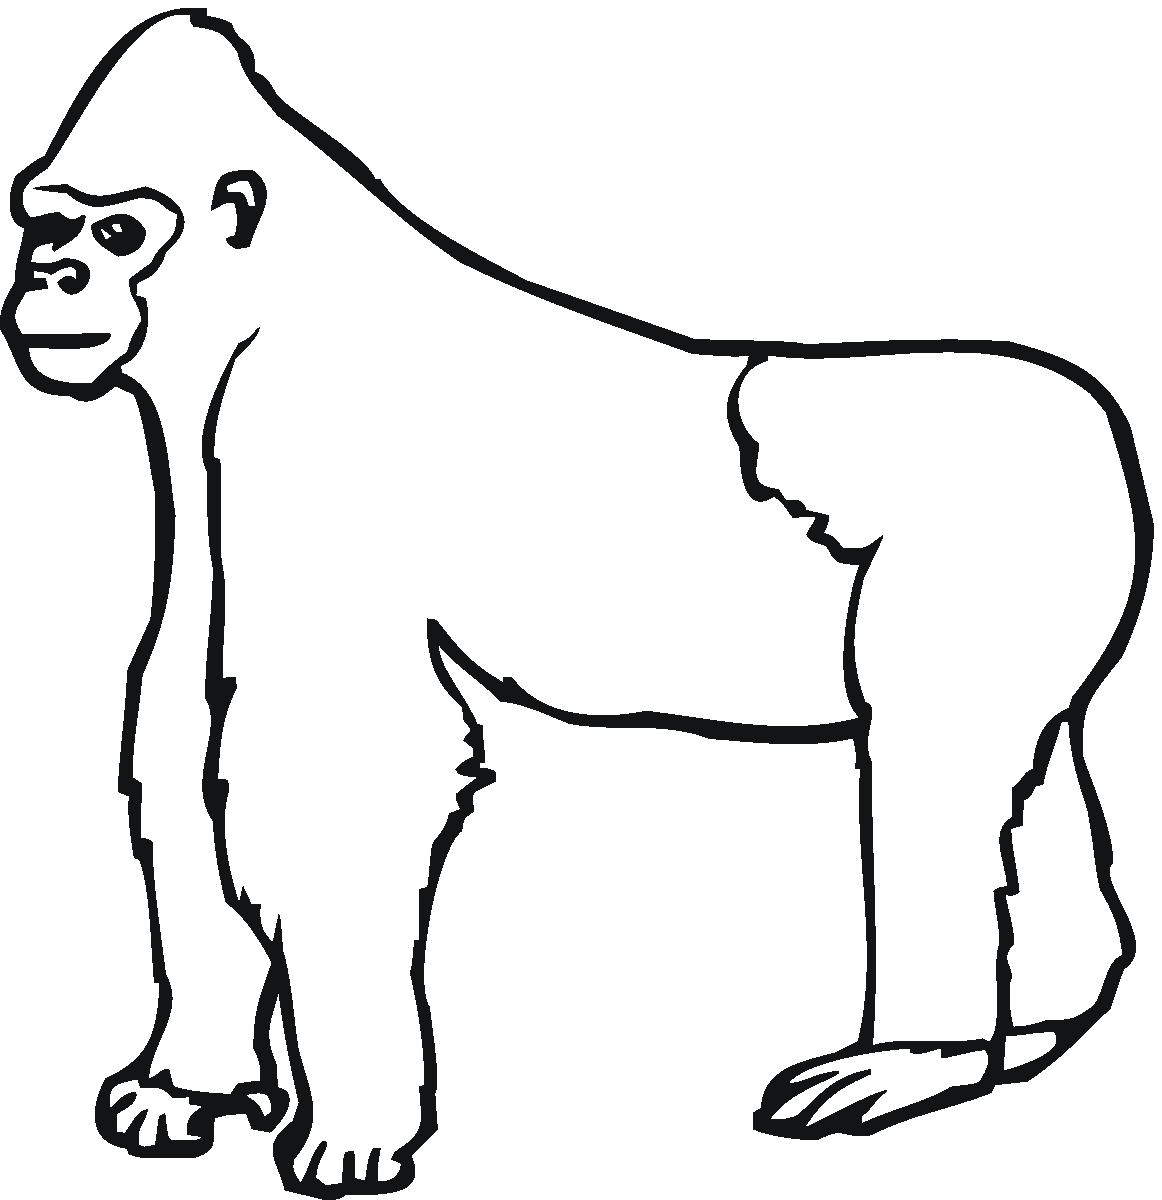 Gorilla Ape | Clipart Panda - Free Clipart Images